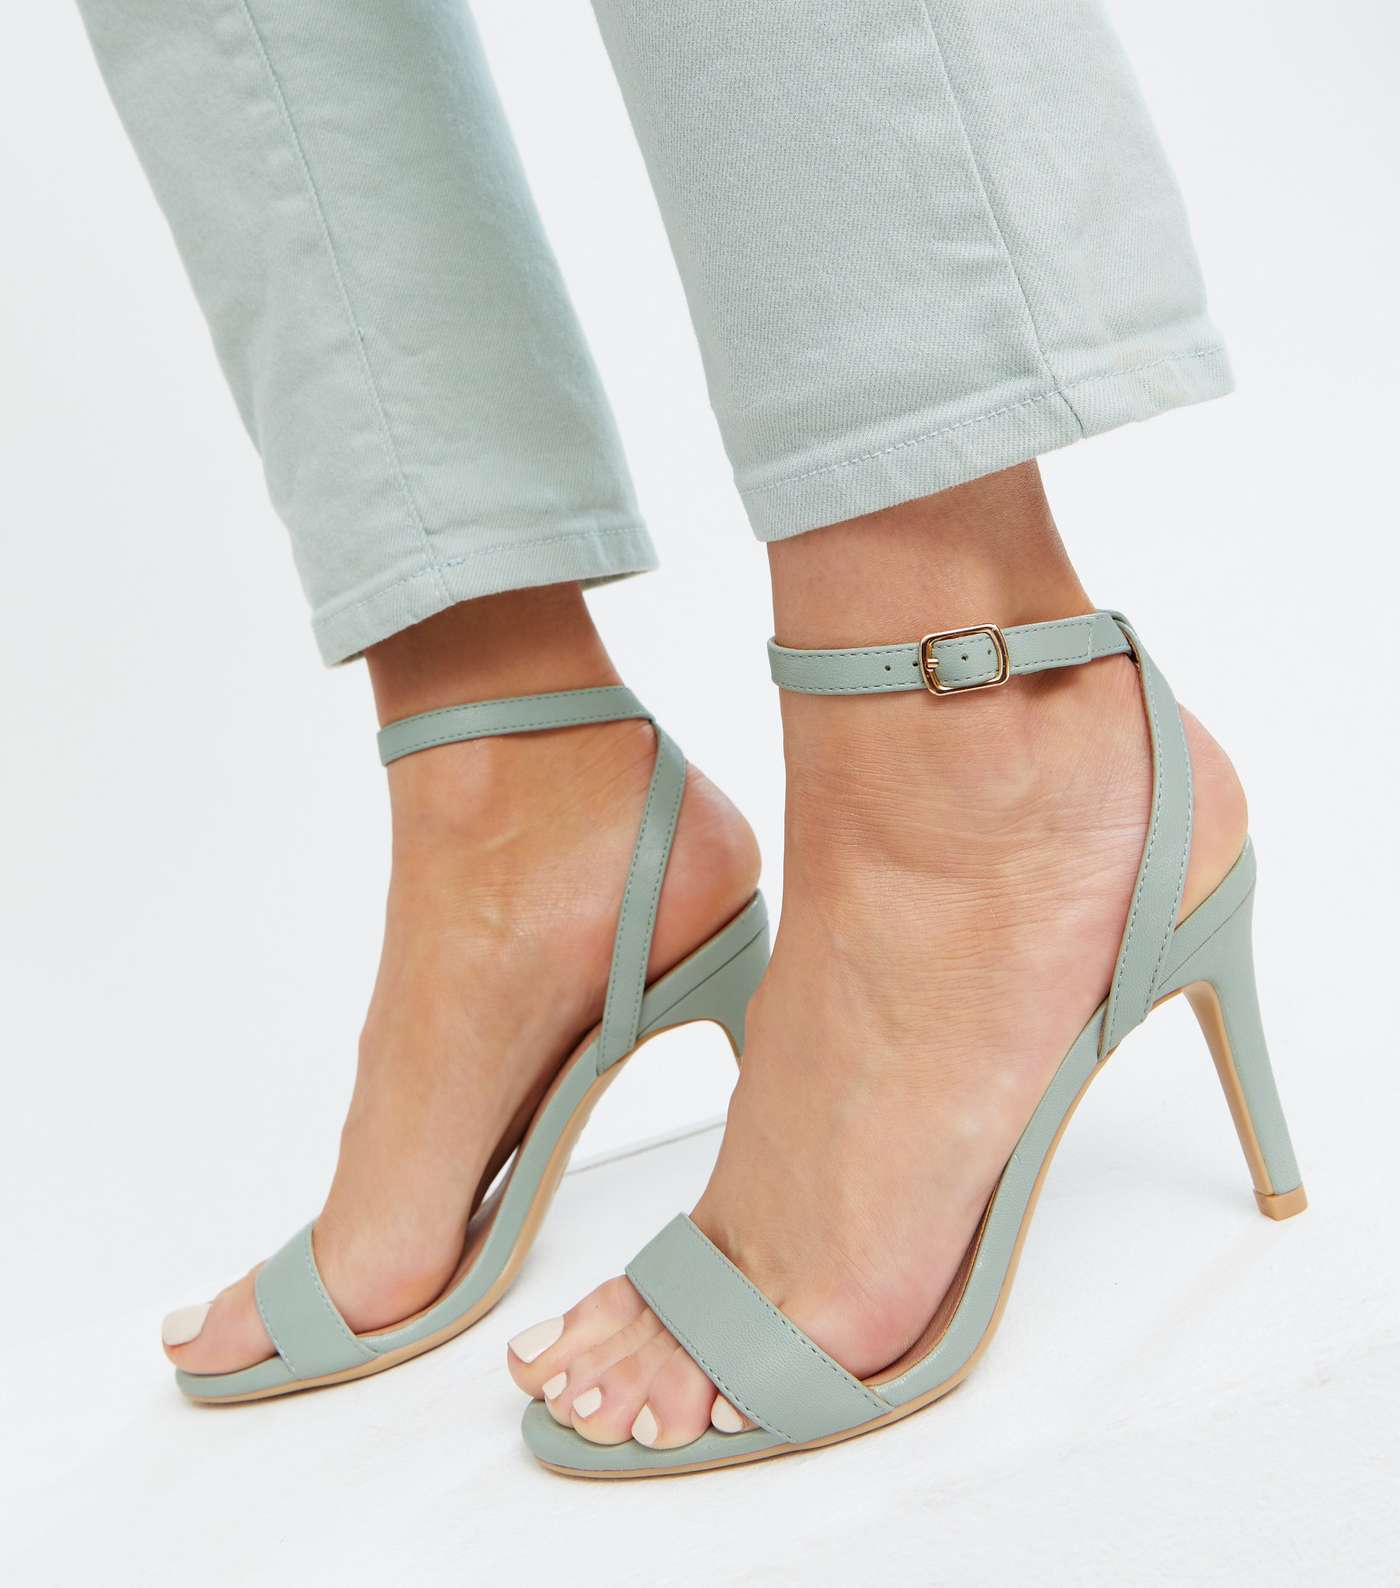 Mint Green Leather-Look Stiletto Heel Sandals Image 2